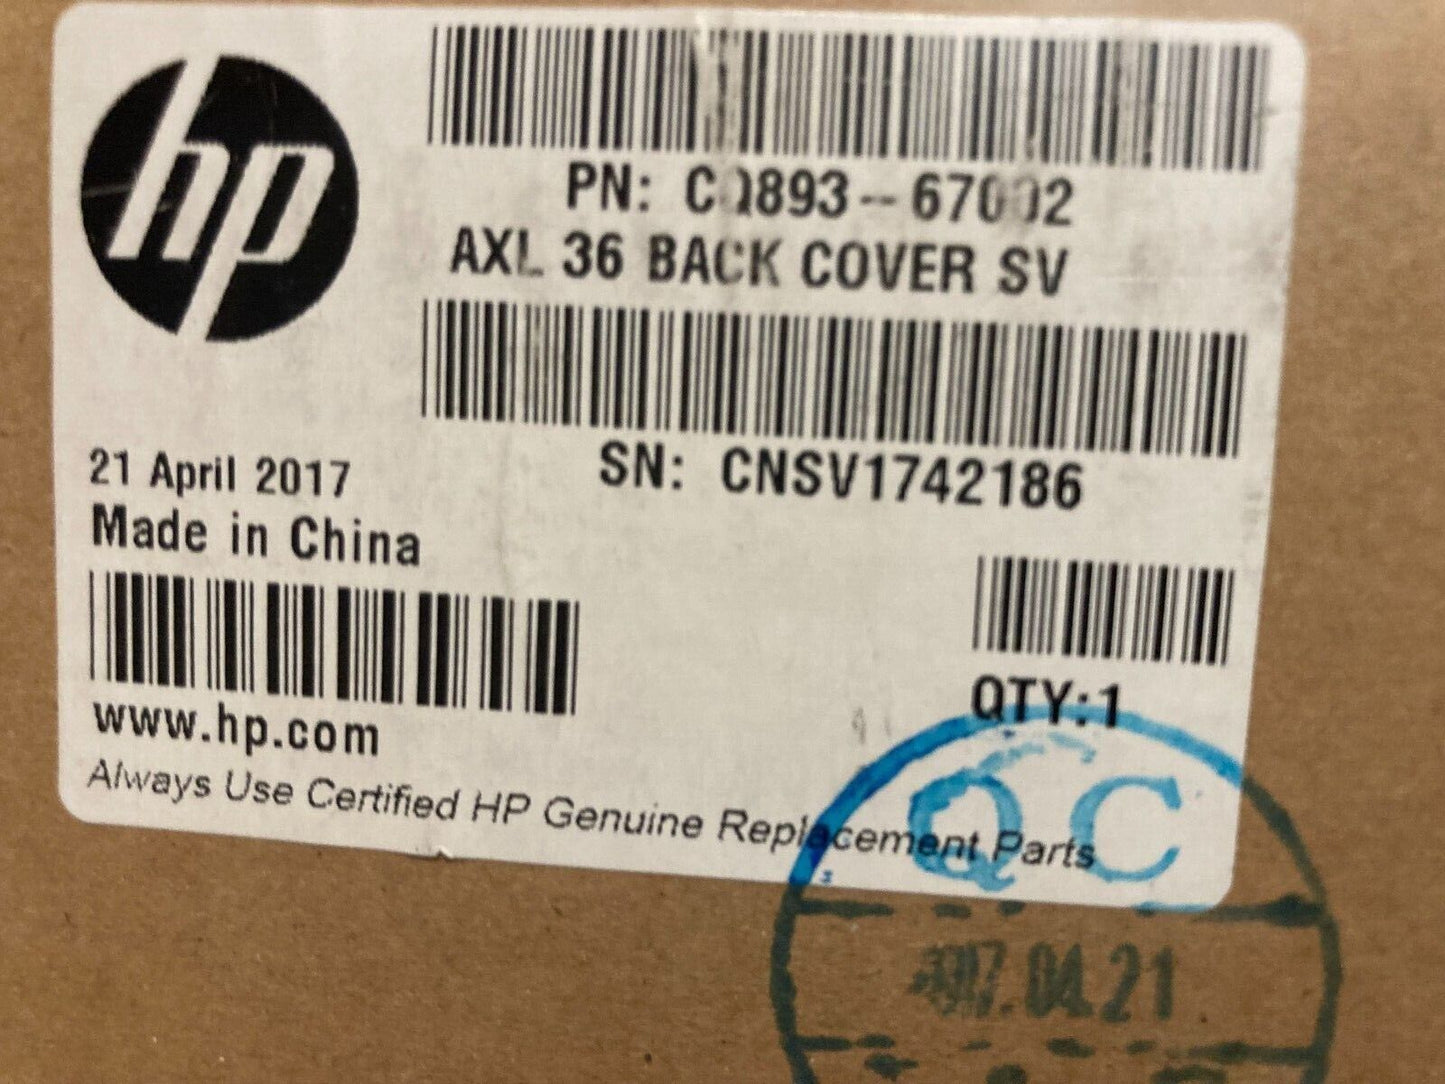 NEW HP CQ893-67002 AmpXL 36 Back cover DESIGNJET T520 T525 T530 T630 T650 + MORE